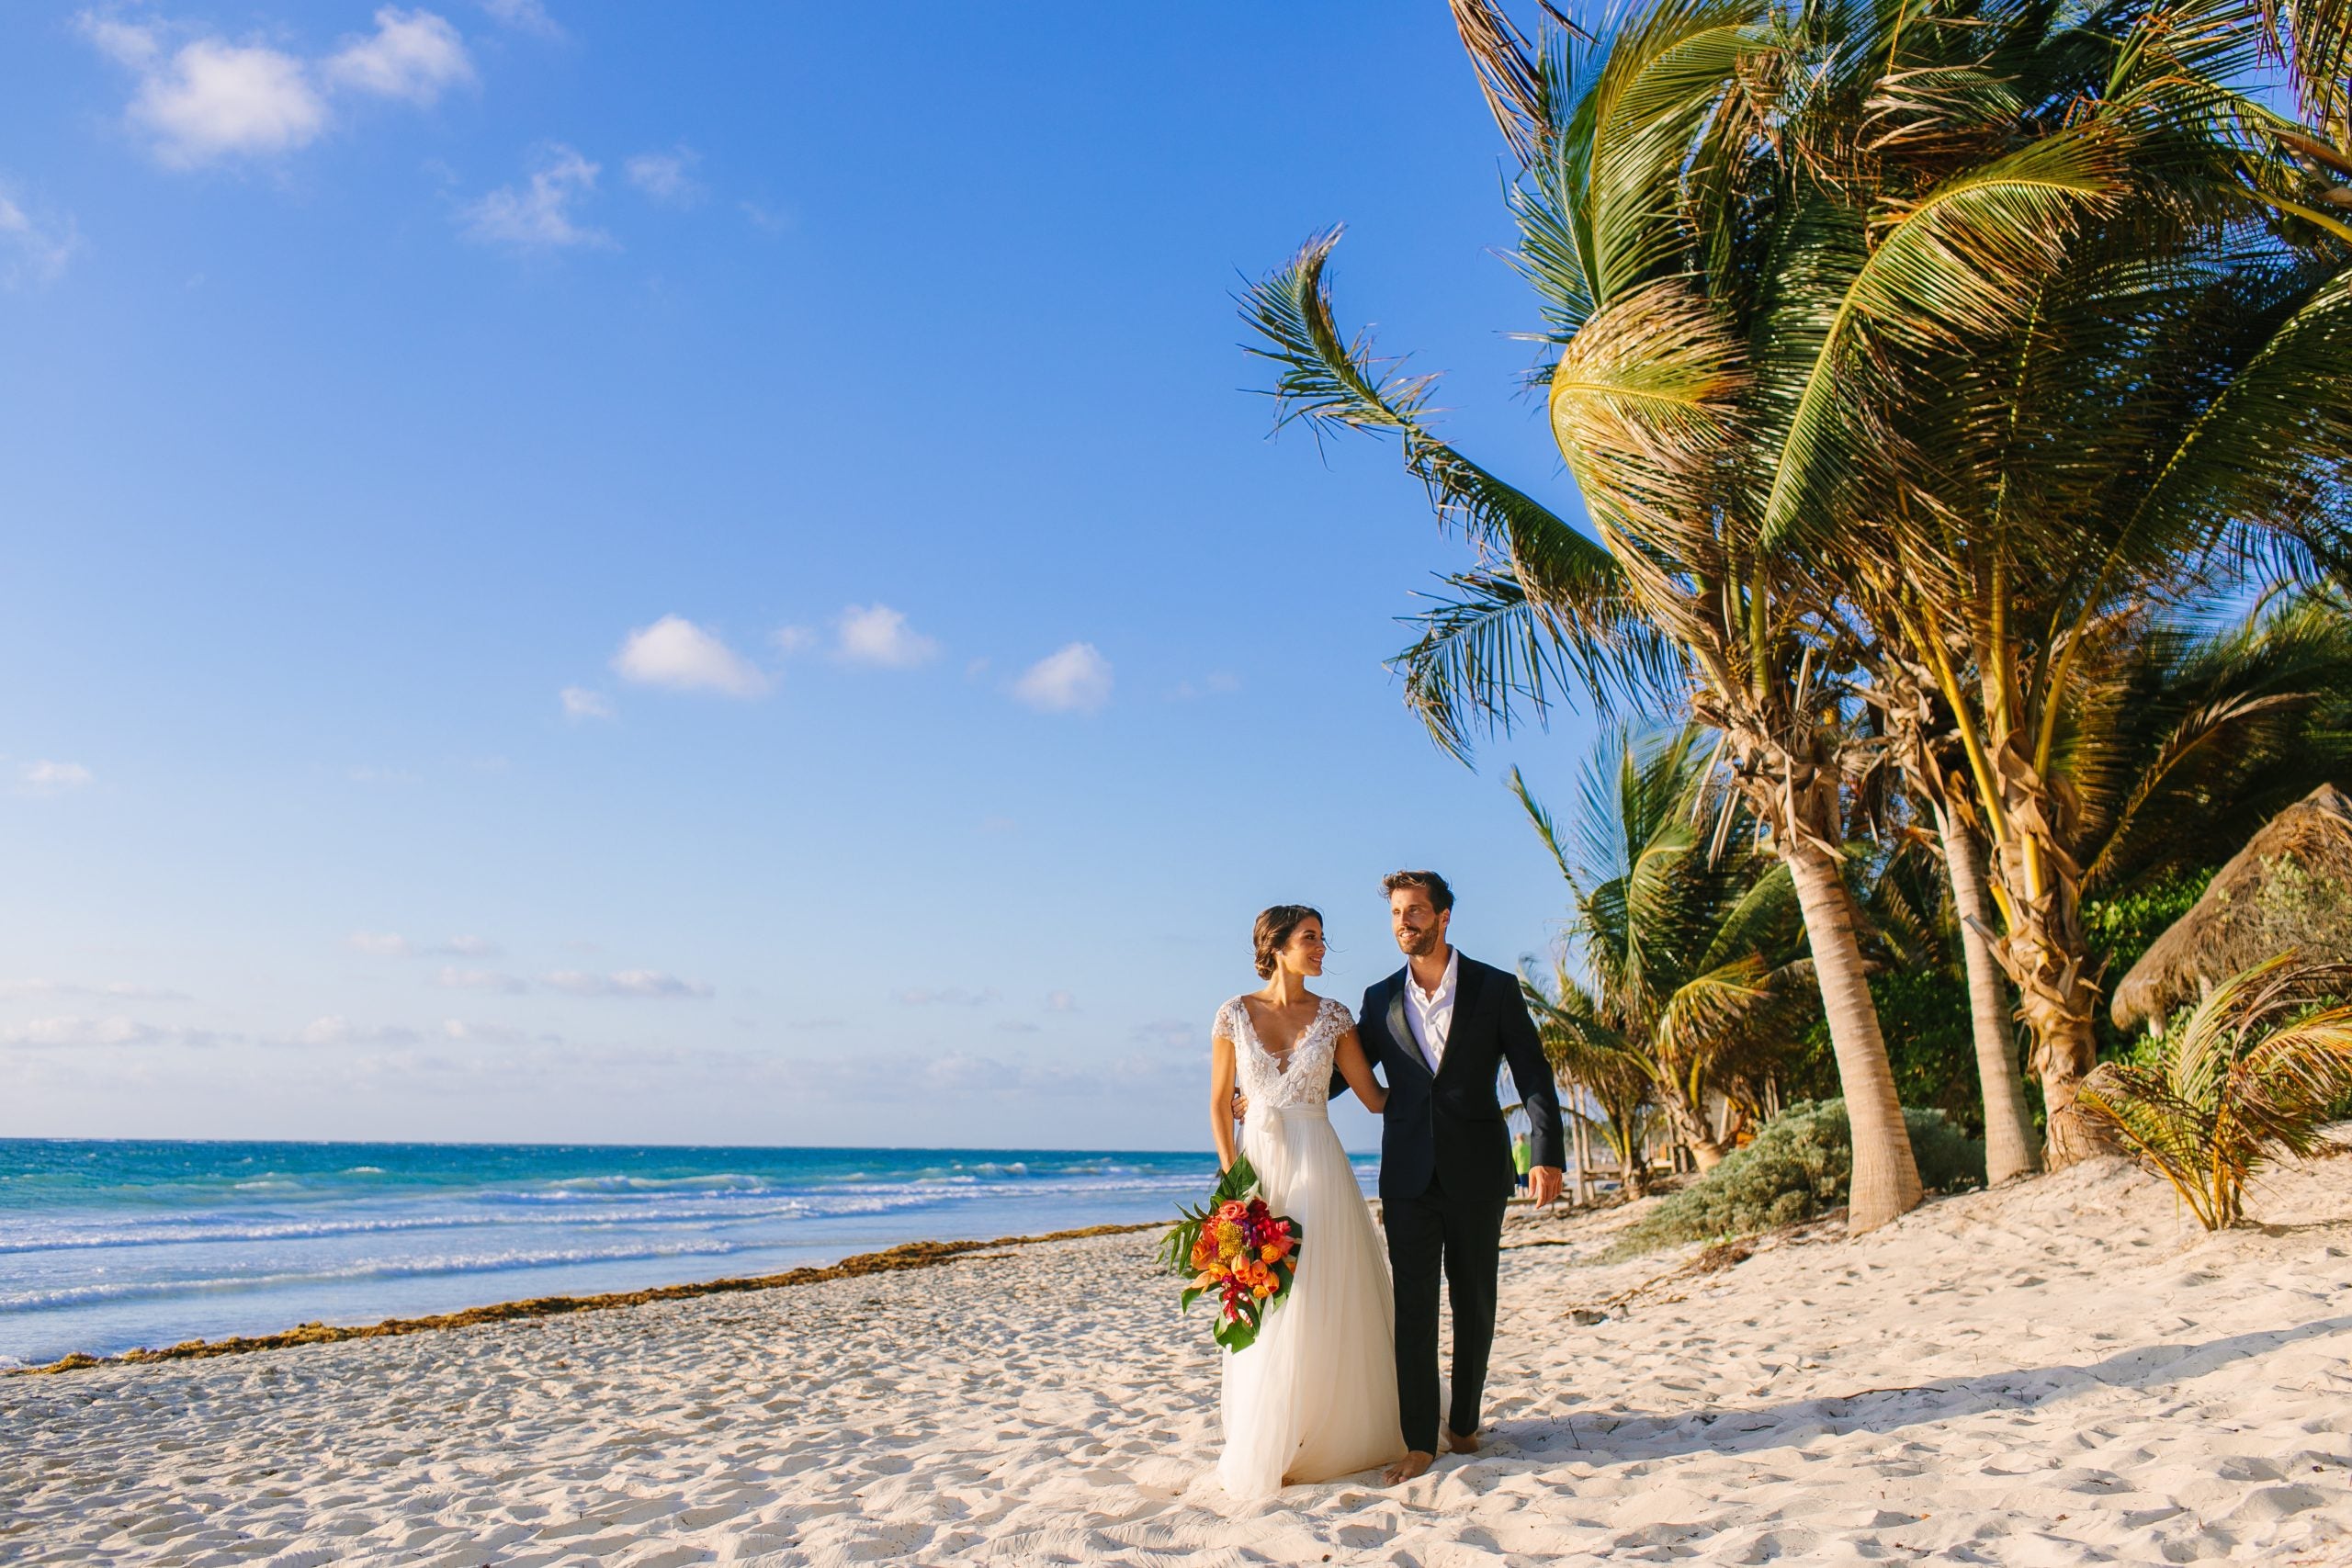 Beach Wedding Dress Ideas You Will Fall In Love With - Glaminati